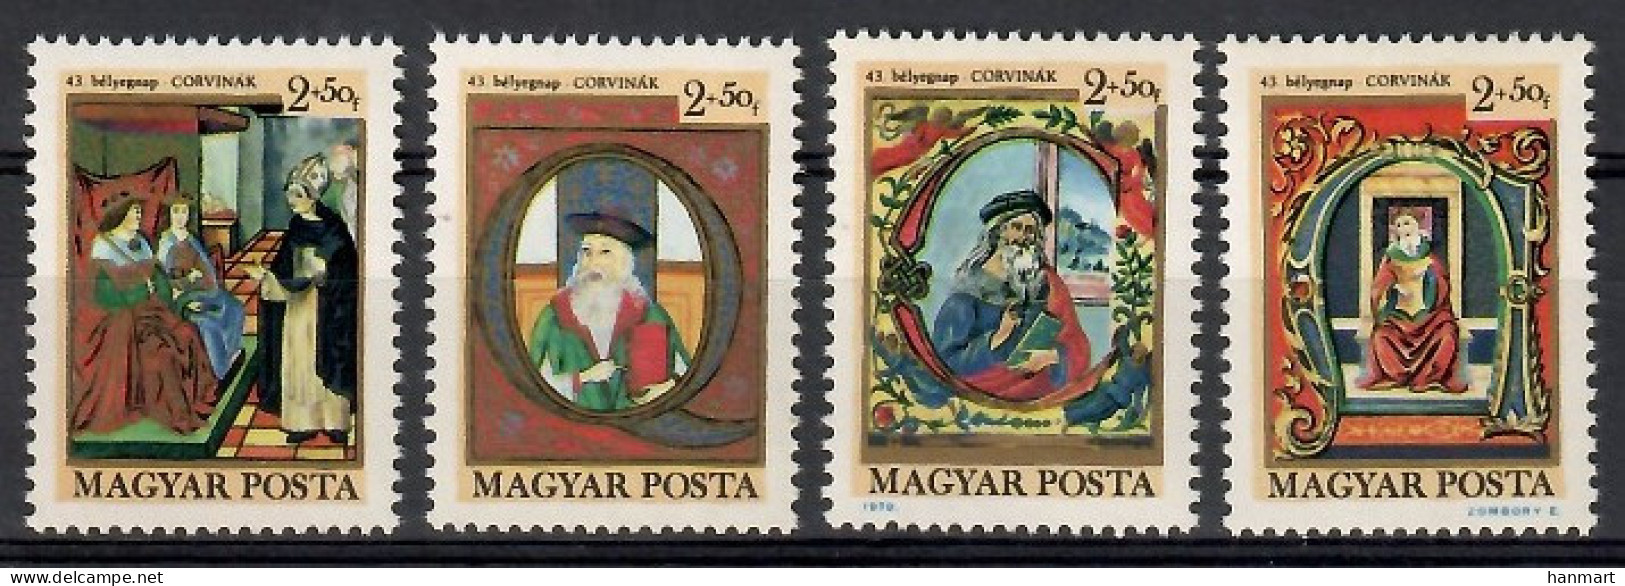 Hungary 1970 Mi 2607-2610 MNH  (ZE4 HNG2607-2610) - Stamp's Day